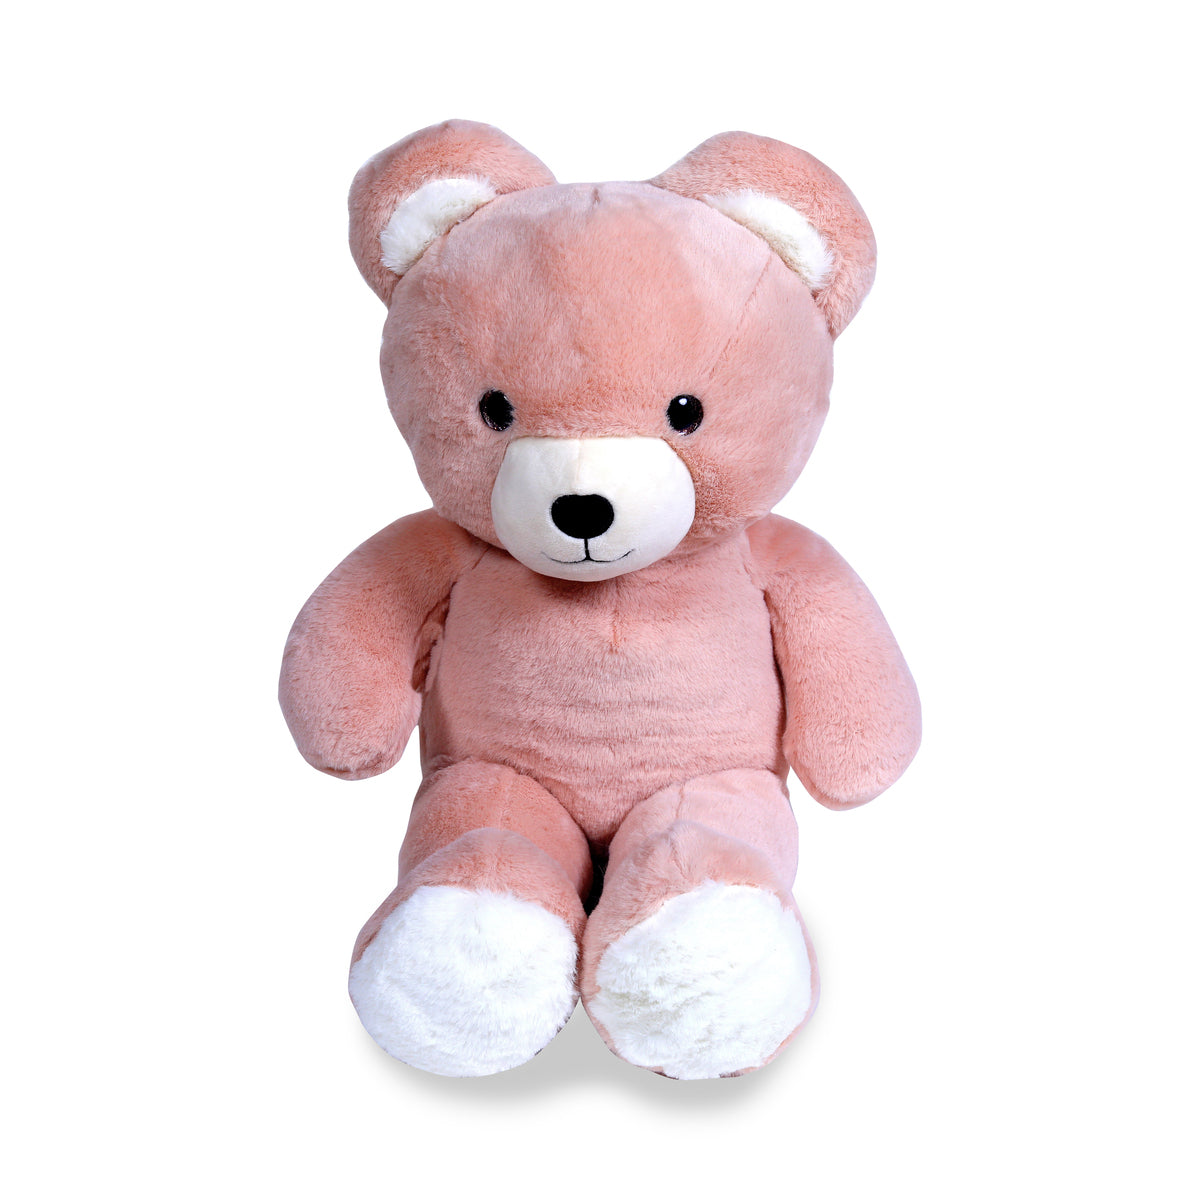 FLUFF - The Fluffy Bear